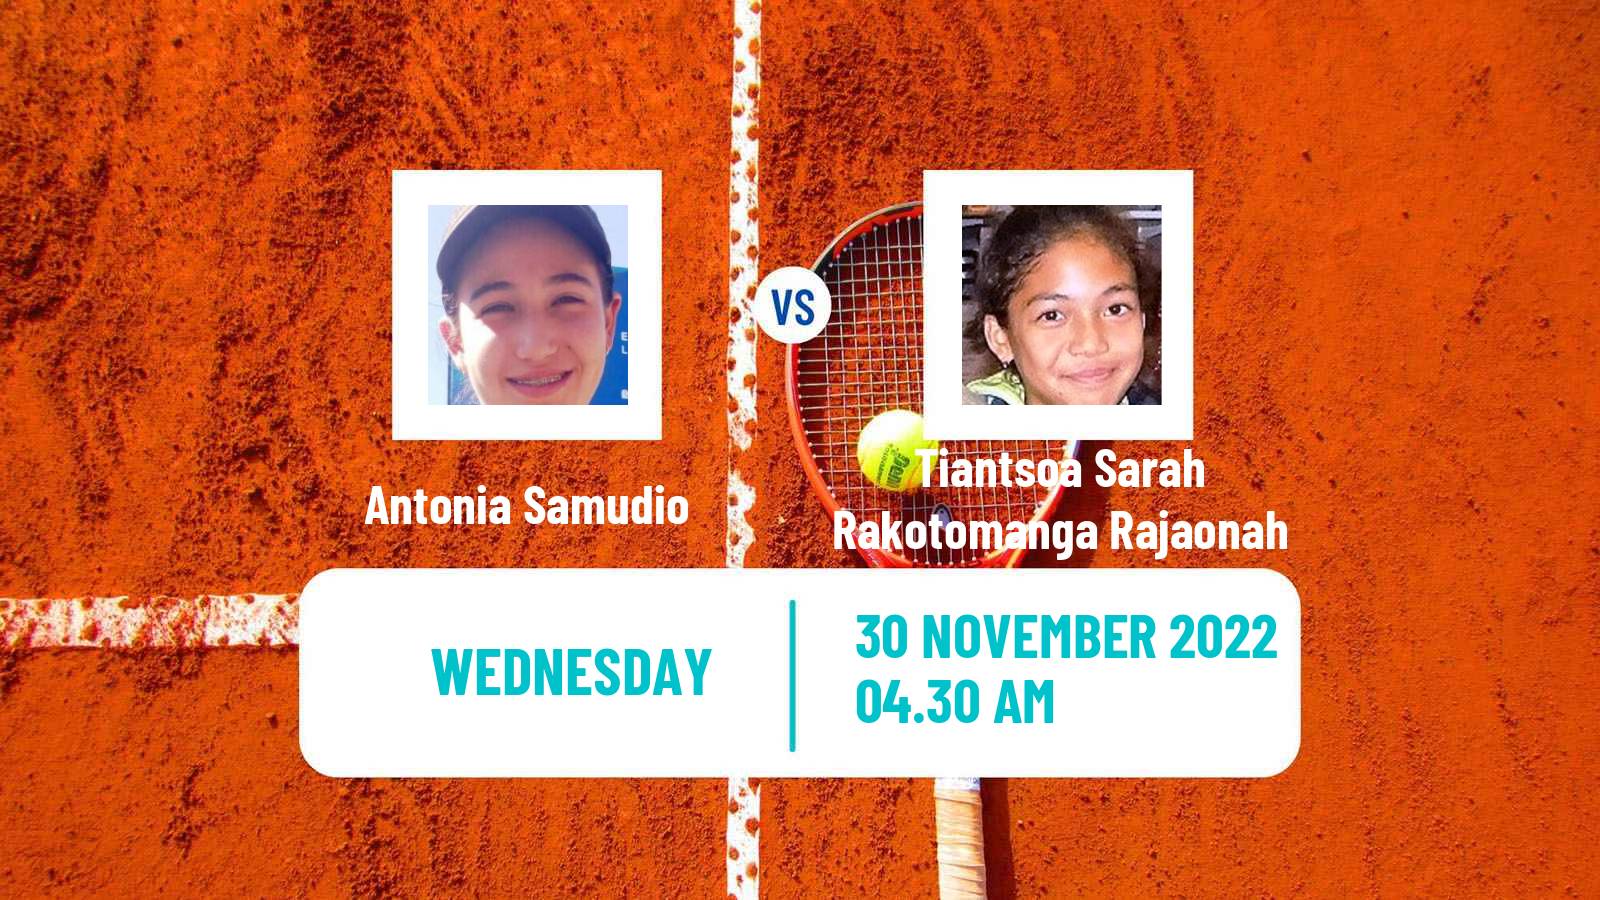 Tennis ITF Tournaments Antonia Samudio - Tiantsoa Sarah Rakotomanga Rajaonah